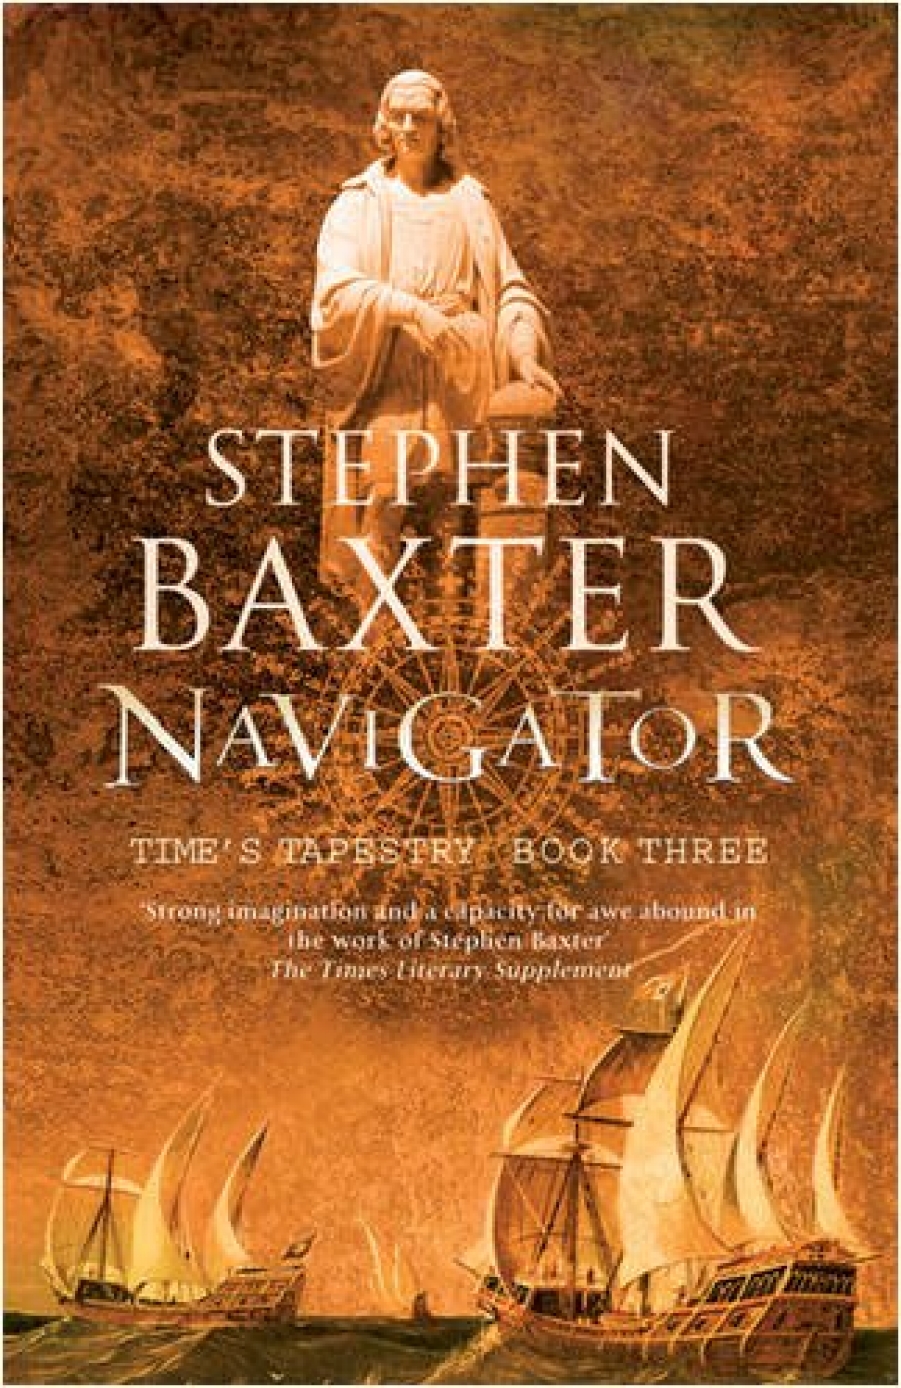 Baxter, Stephen Navigator (Time's Tapestry book 3) 